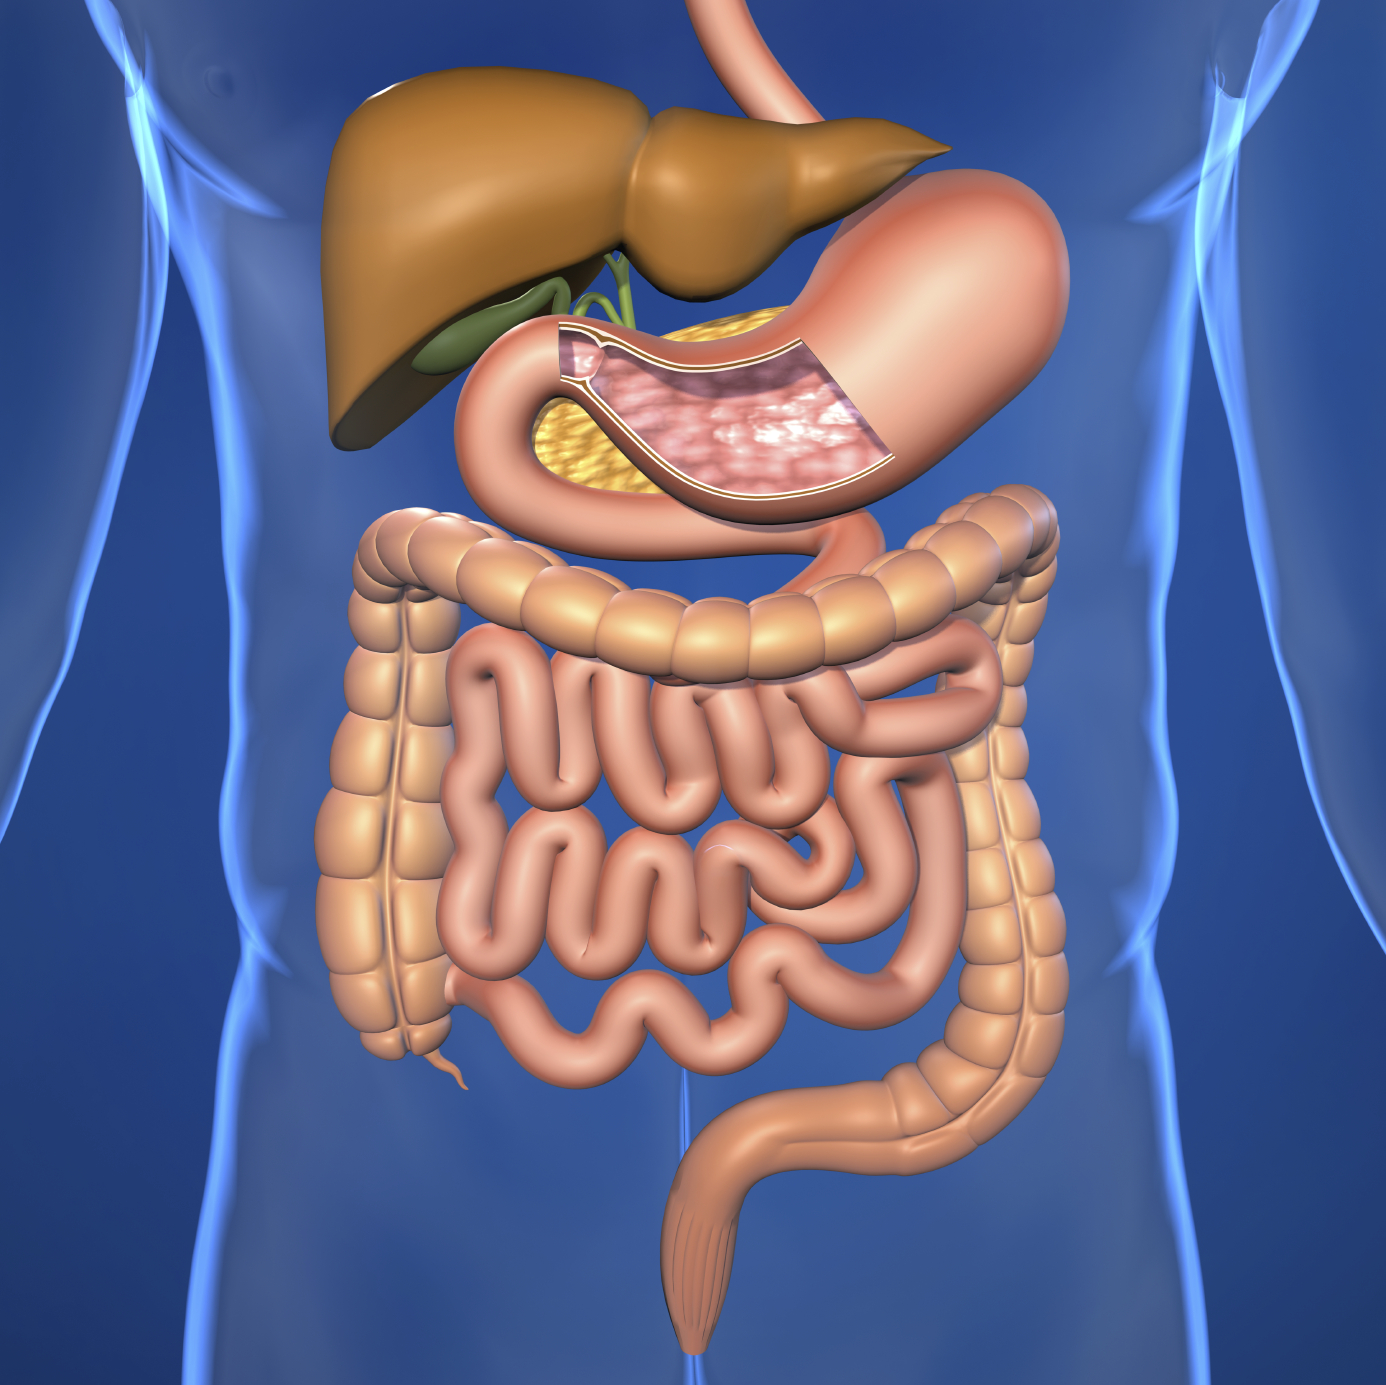 Human Body Digestive System Diagram - Digestive System Diagram Human ...